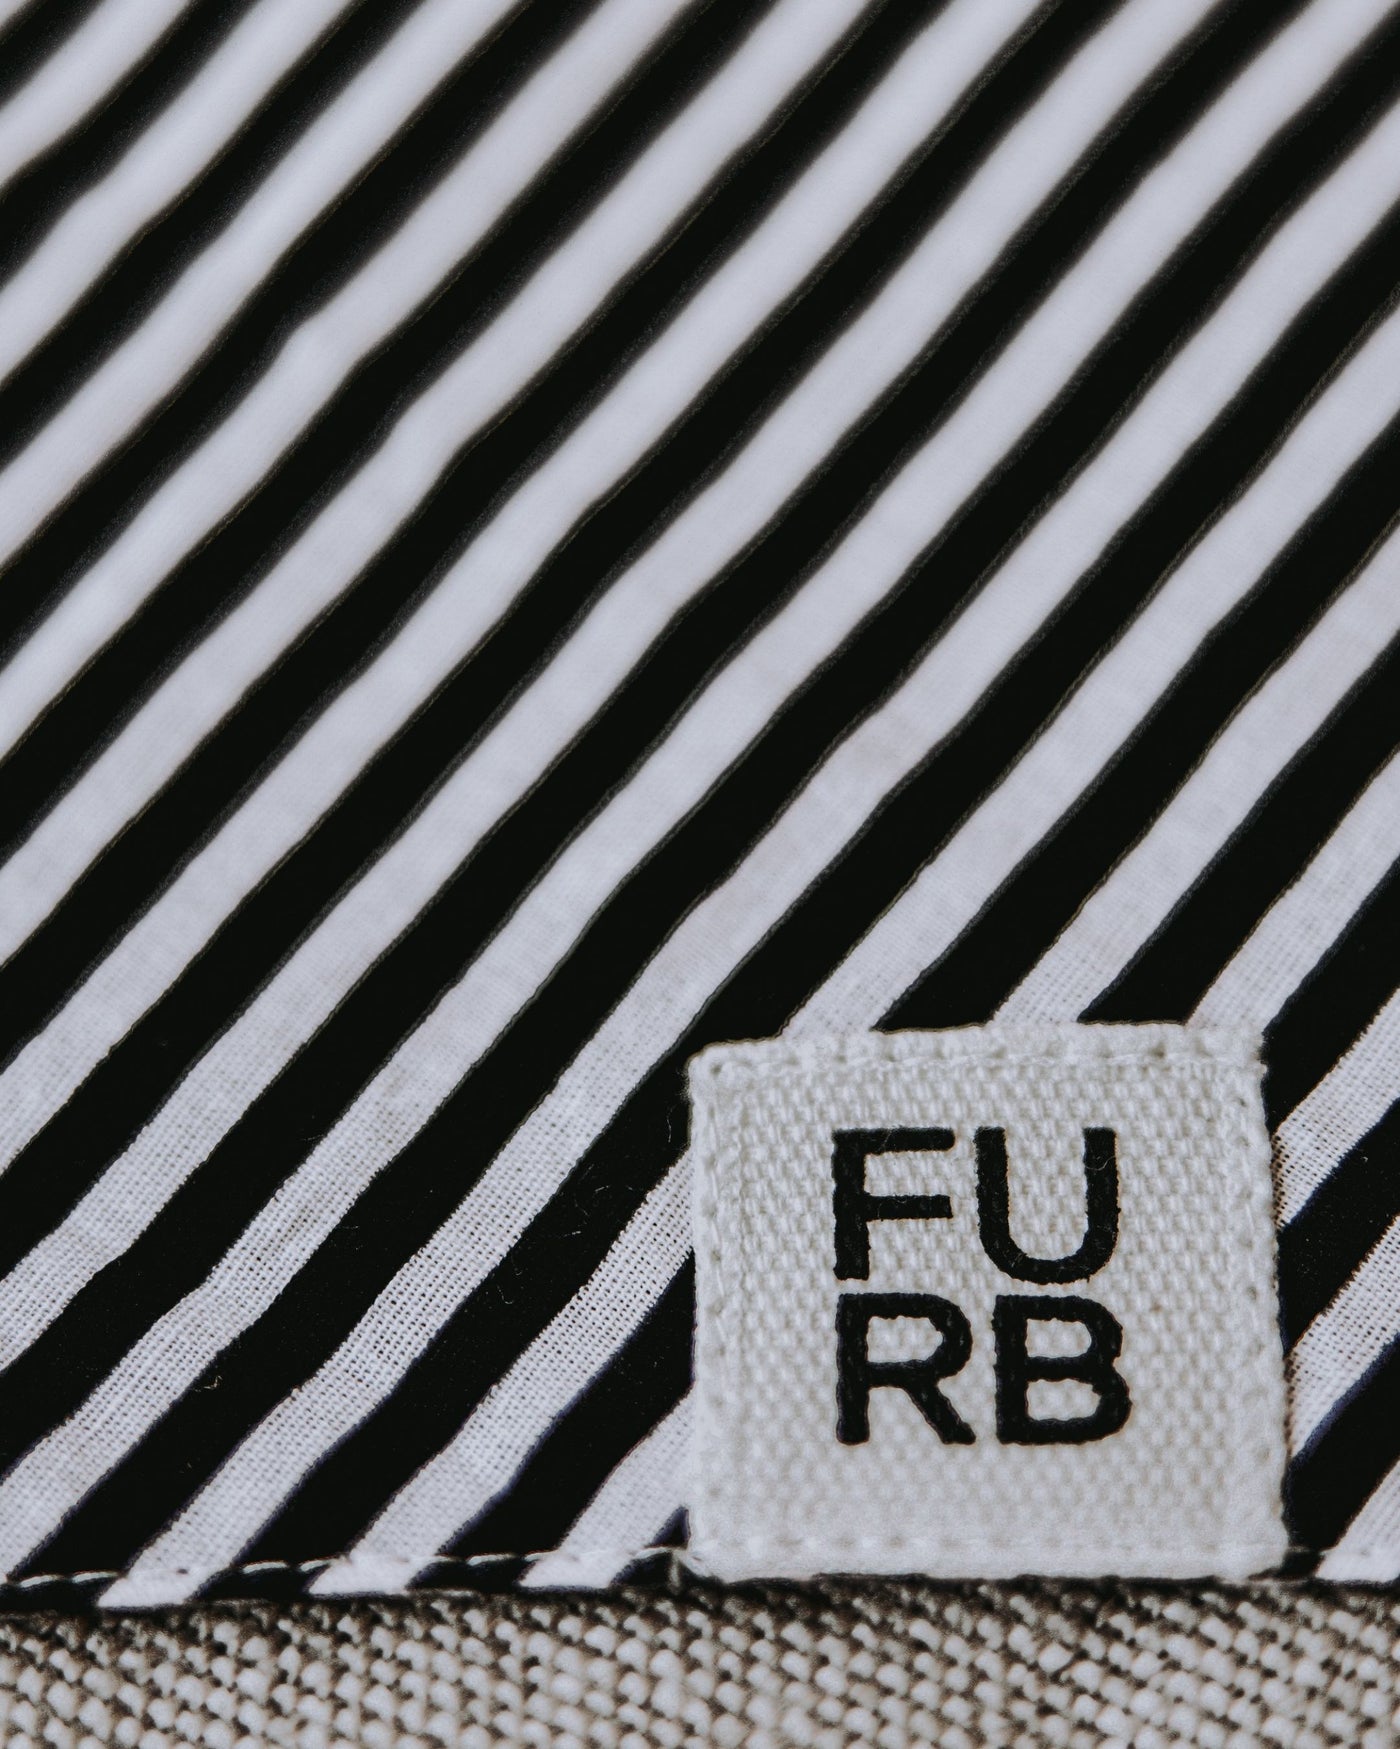 Captain Black + White Striped Bandana Product Image Detail